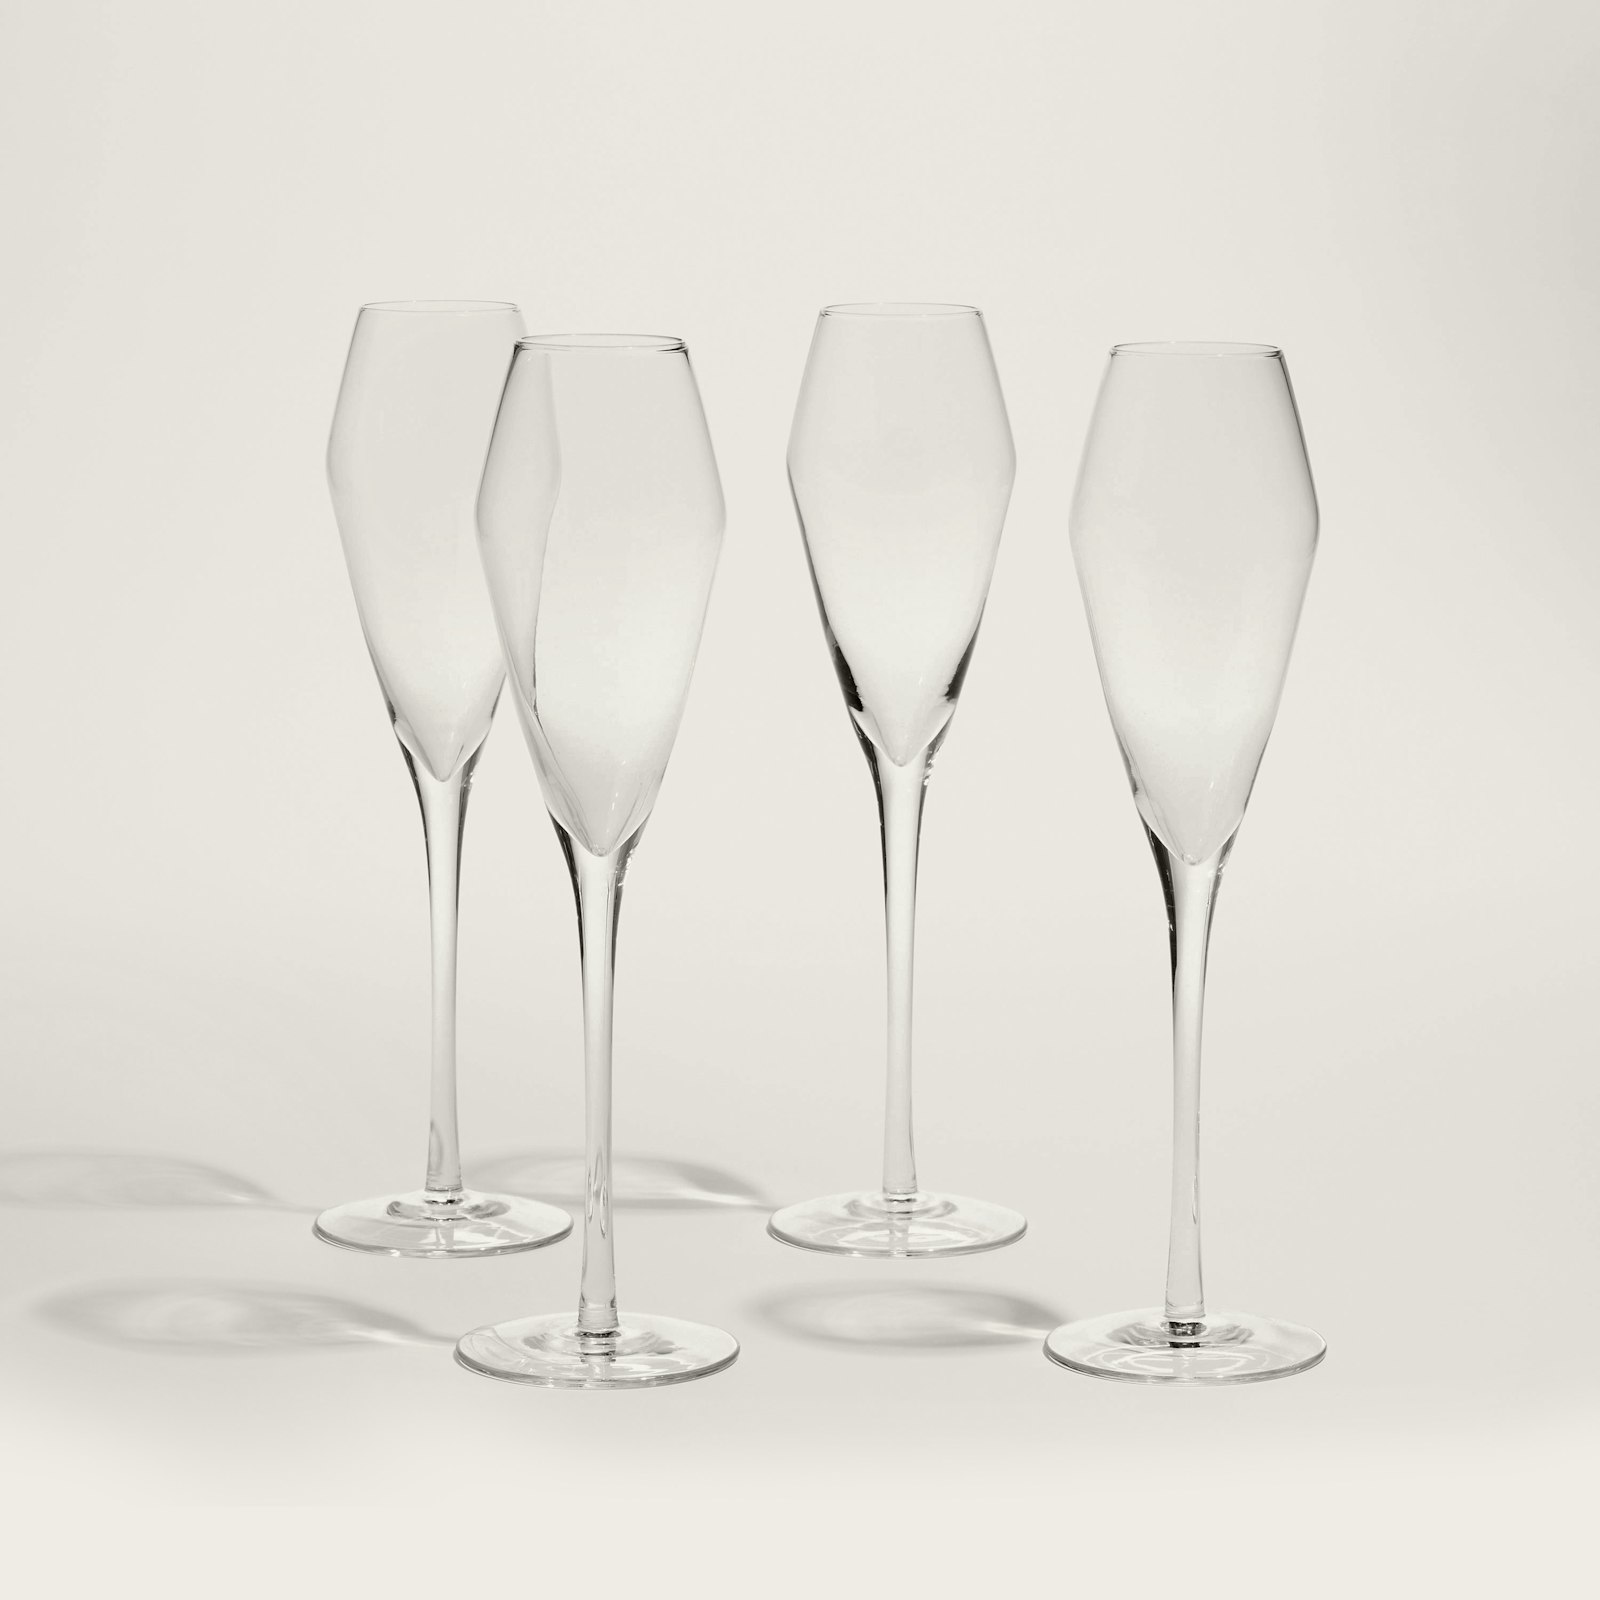 ChampagneGlassesSetOf4_Clear_Home_StillLife_1x1_0067_Edited.jpg